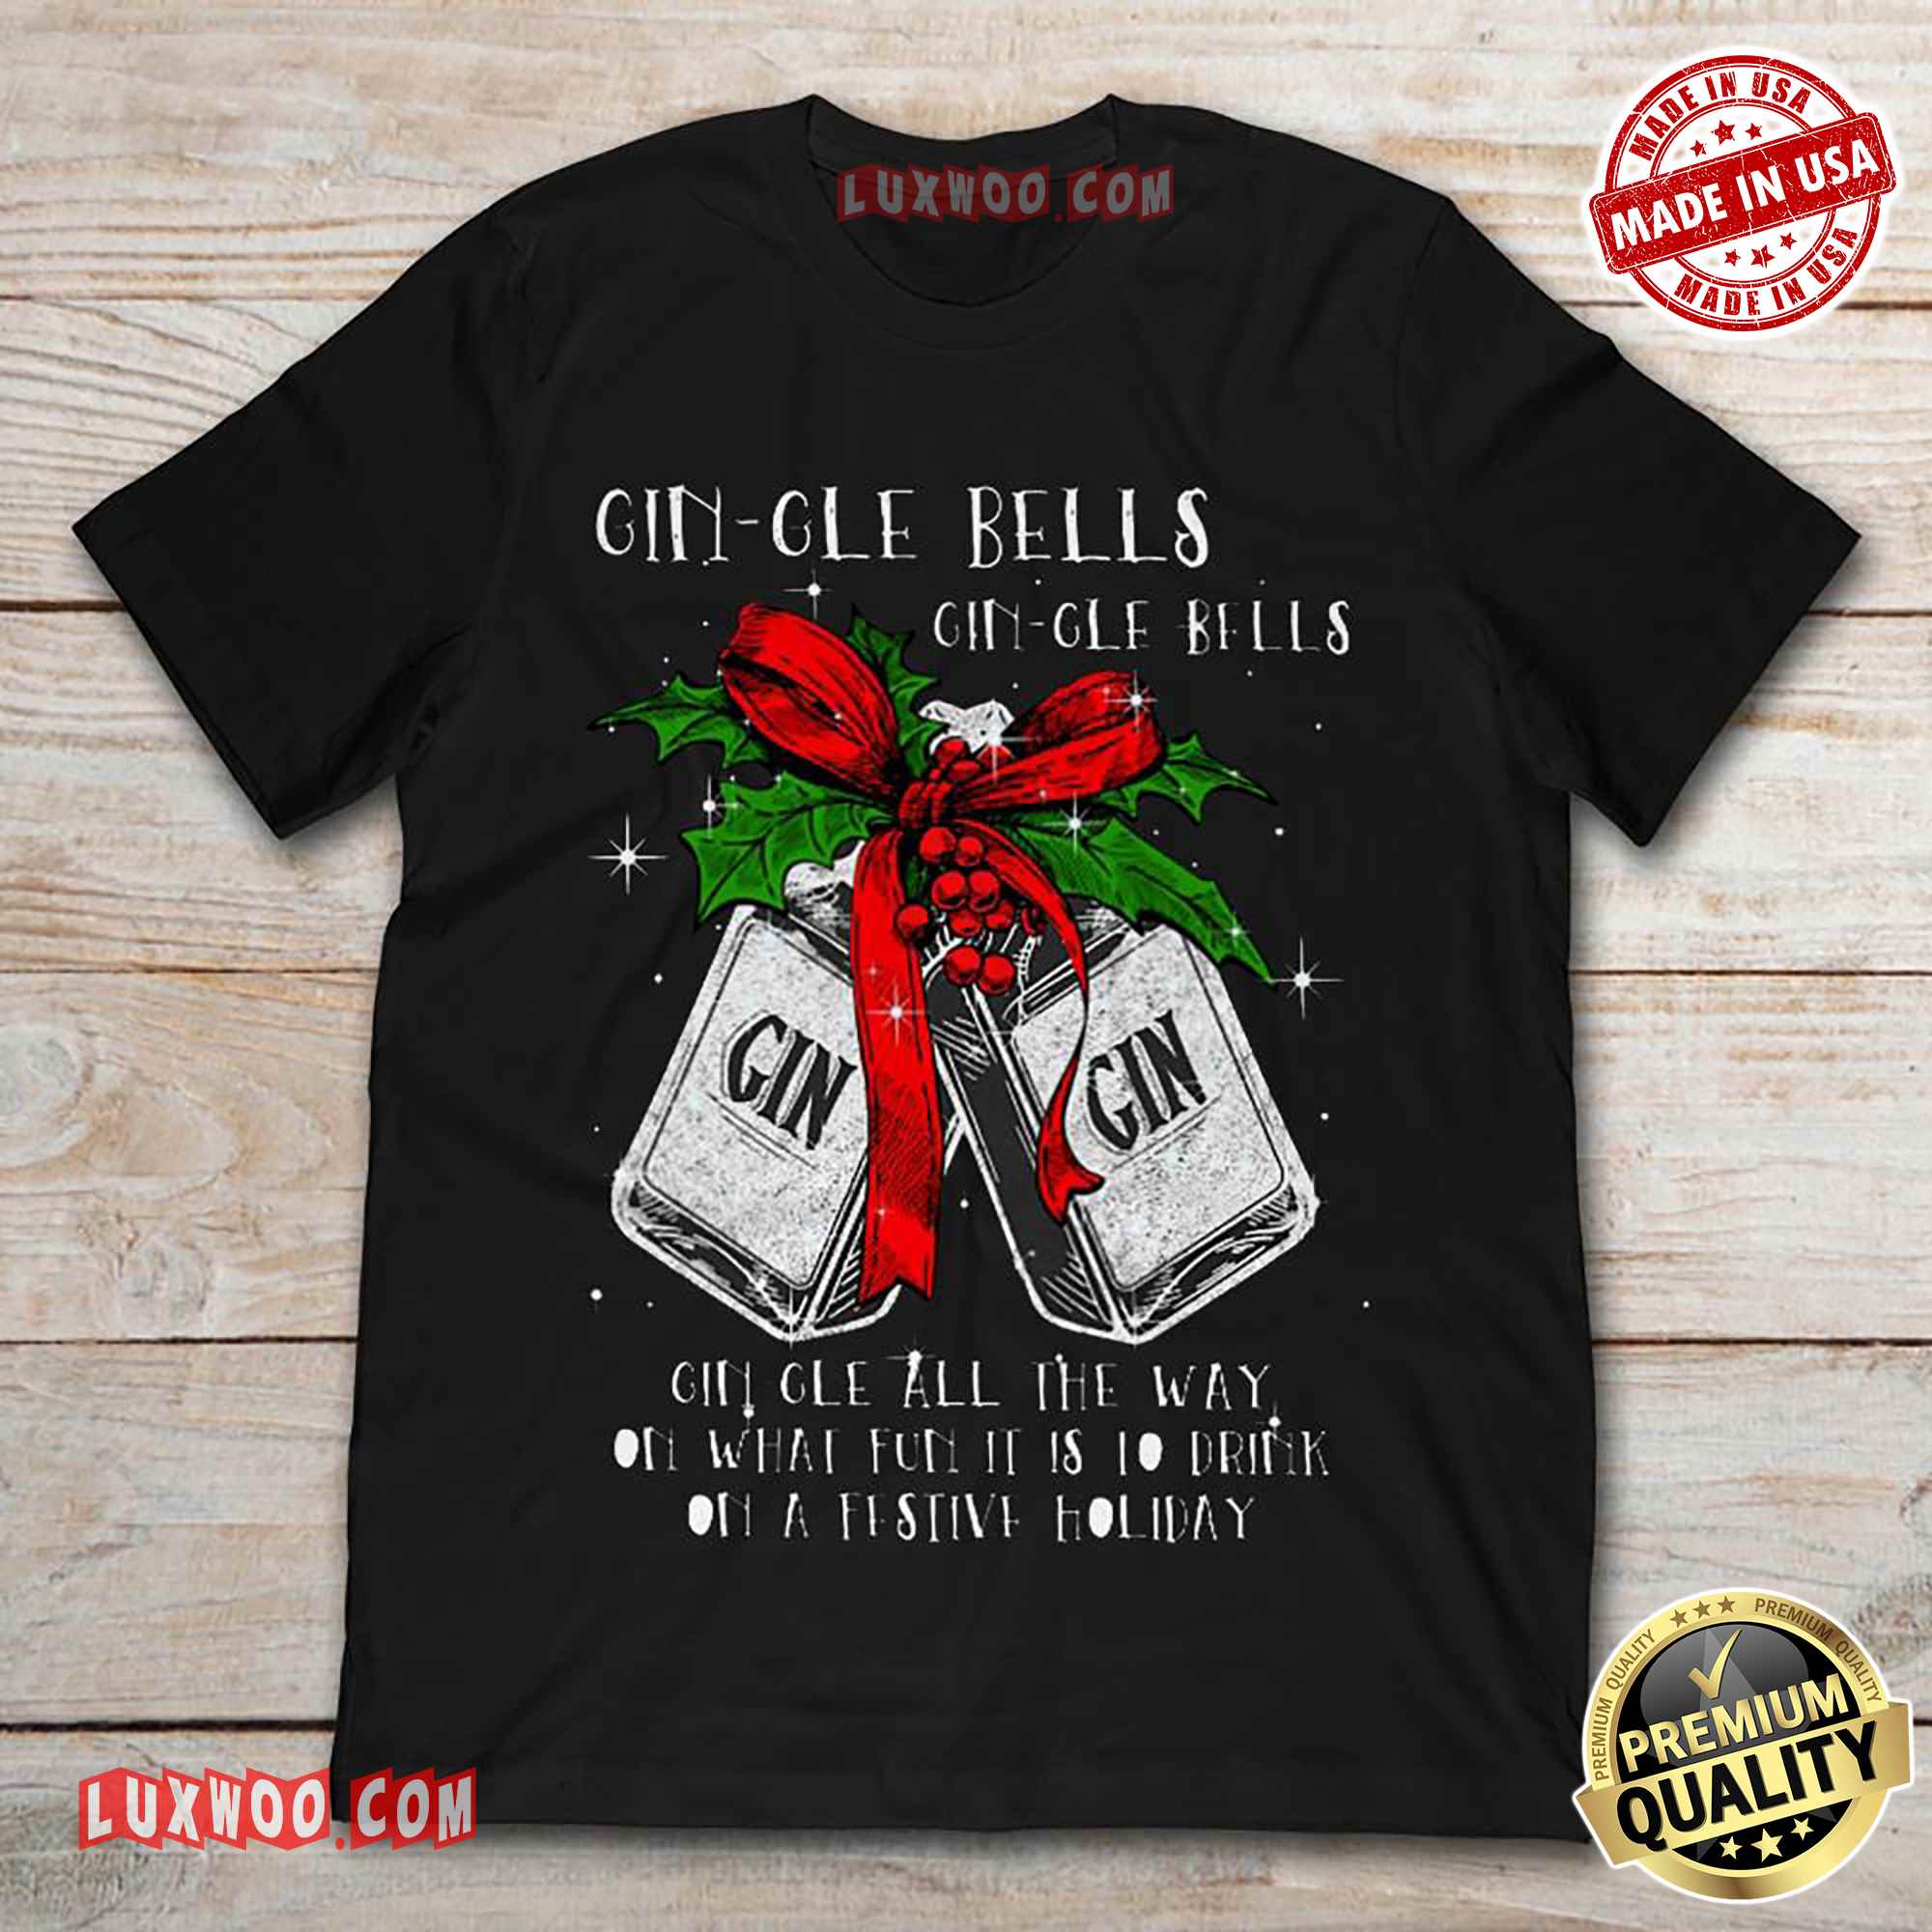 Gin-gle Bells Gin-gle Bells Gin-gle All The Way Tee Shirt - Luxwoo.com